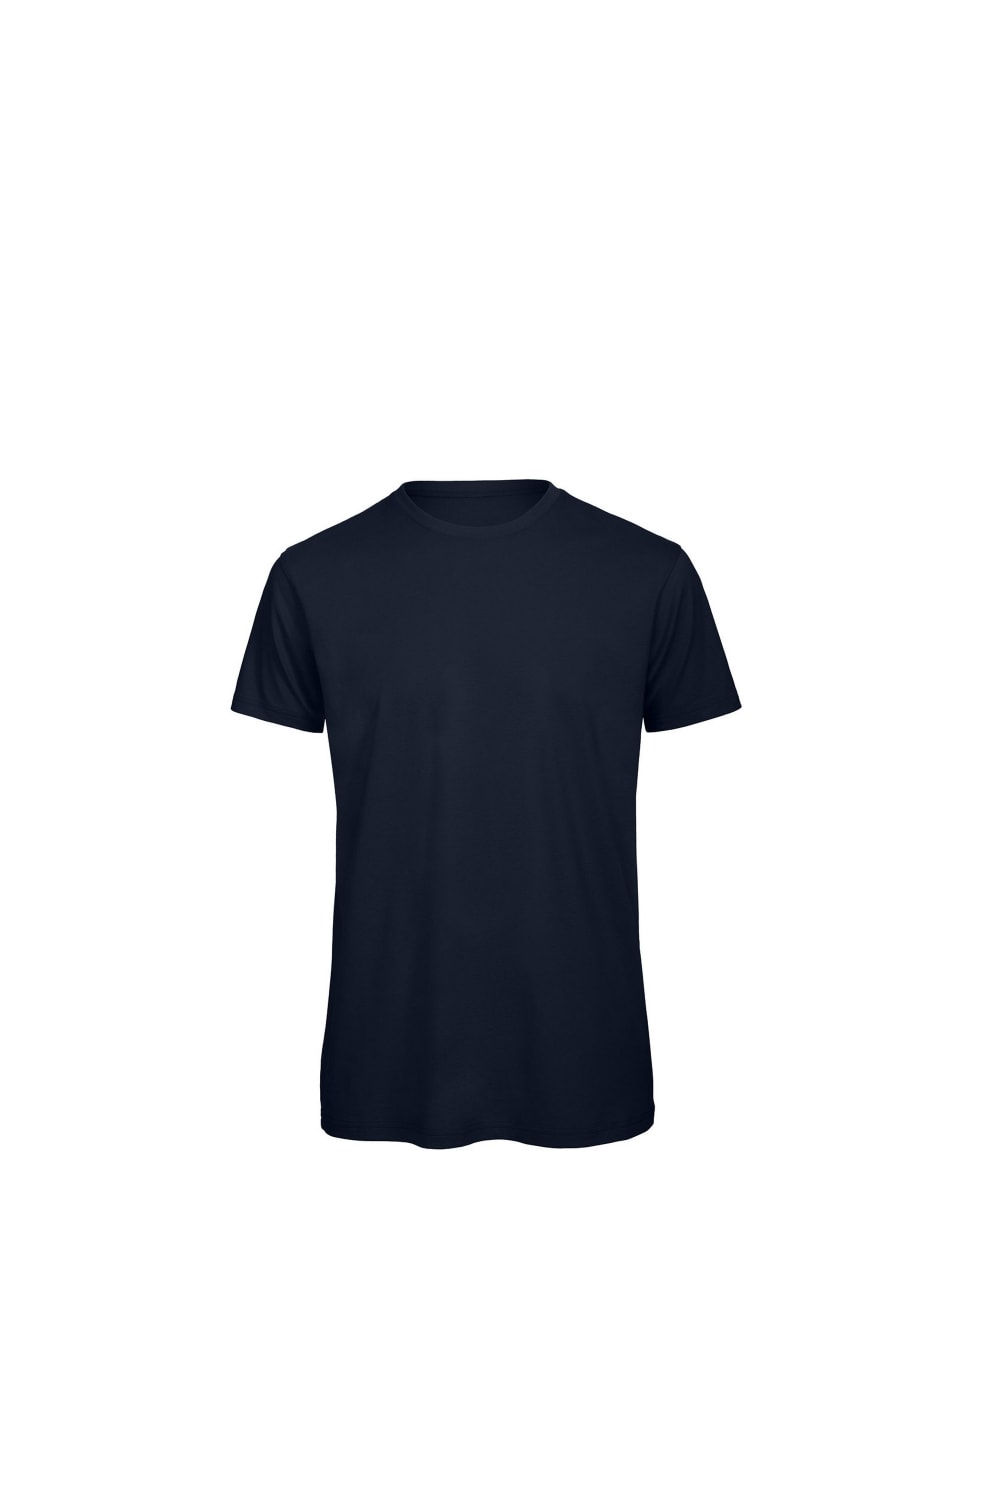 B&C Mens Favourite Organic Cotton Crew T-Shirt (Navy Blue)